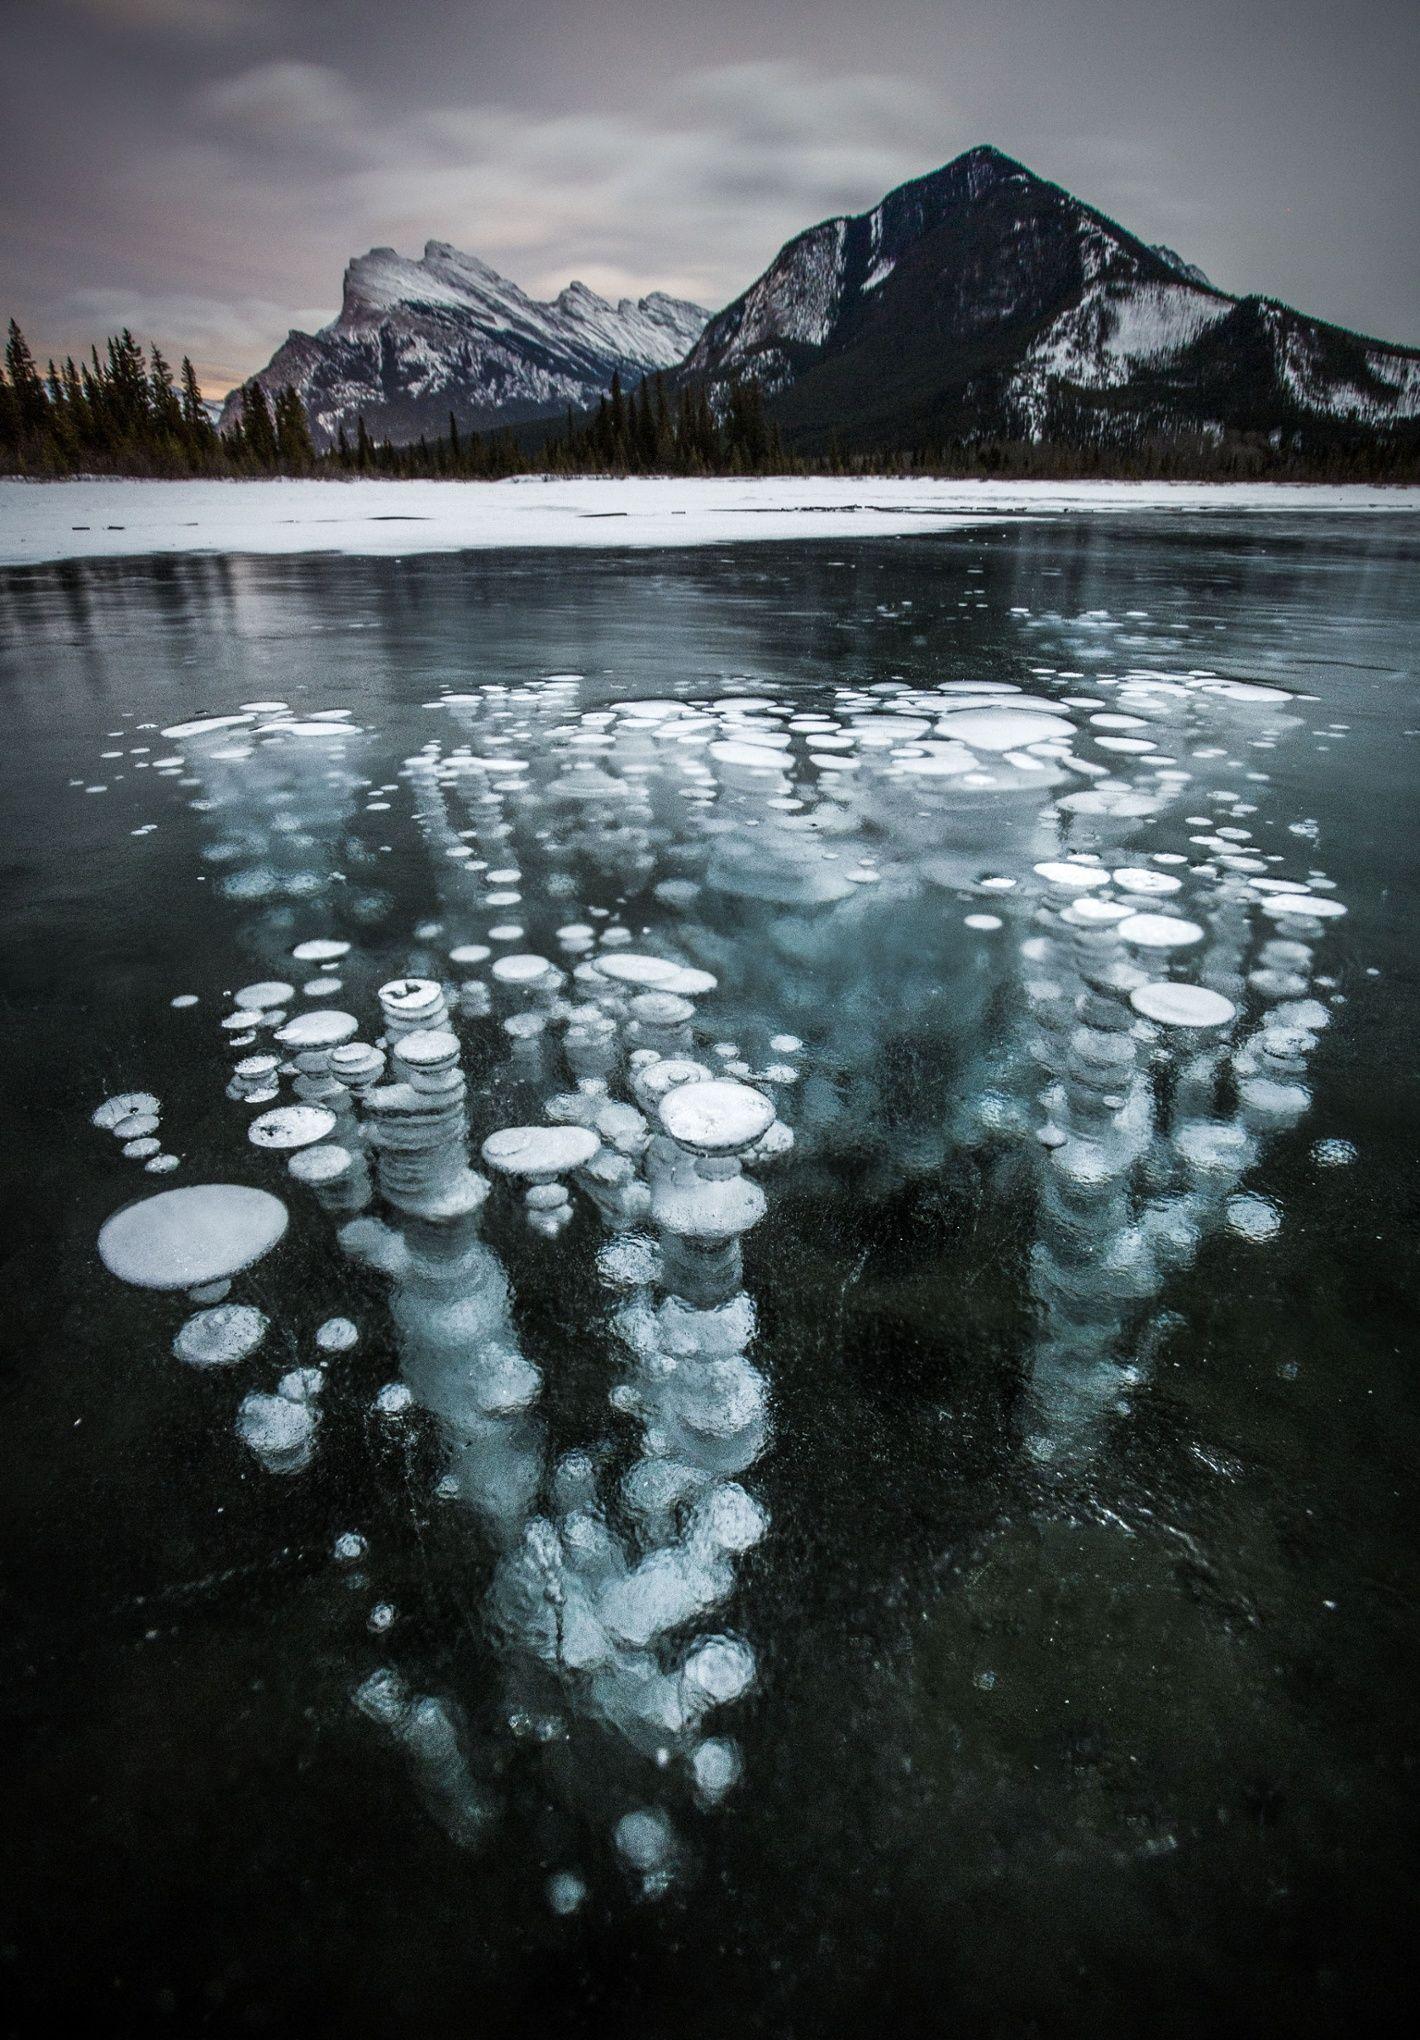 Frozen bubbles in Canadian lakes picture. Winter Scenes